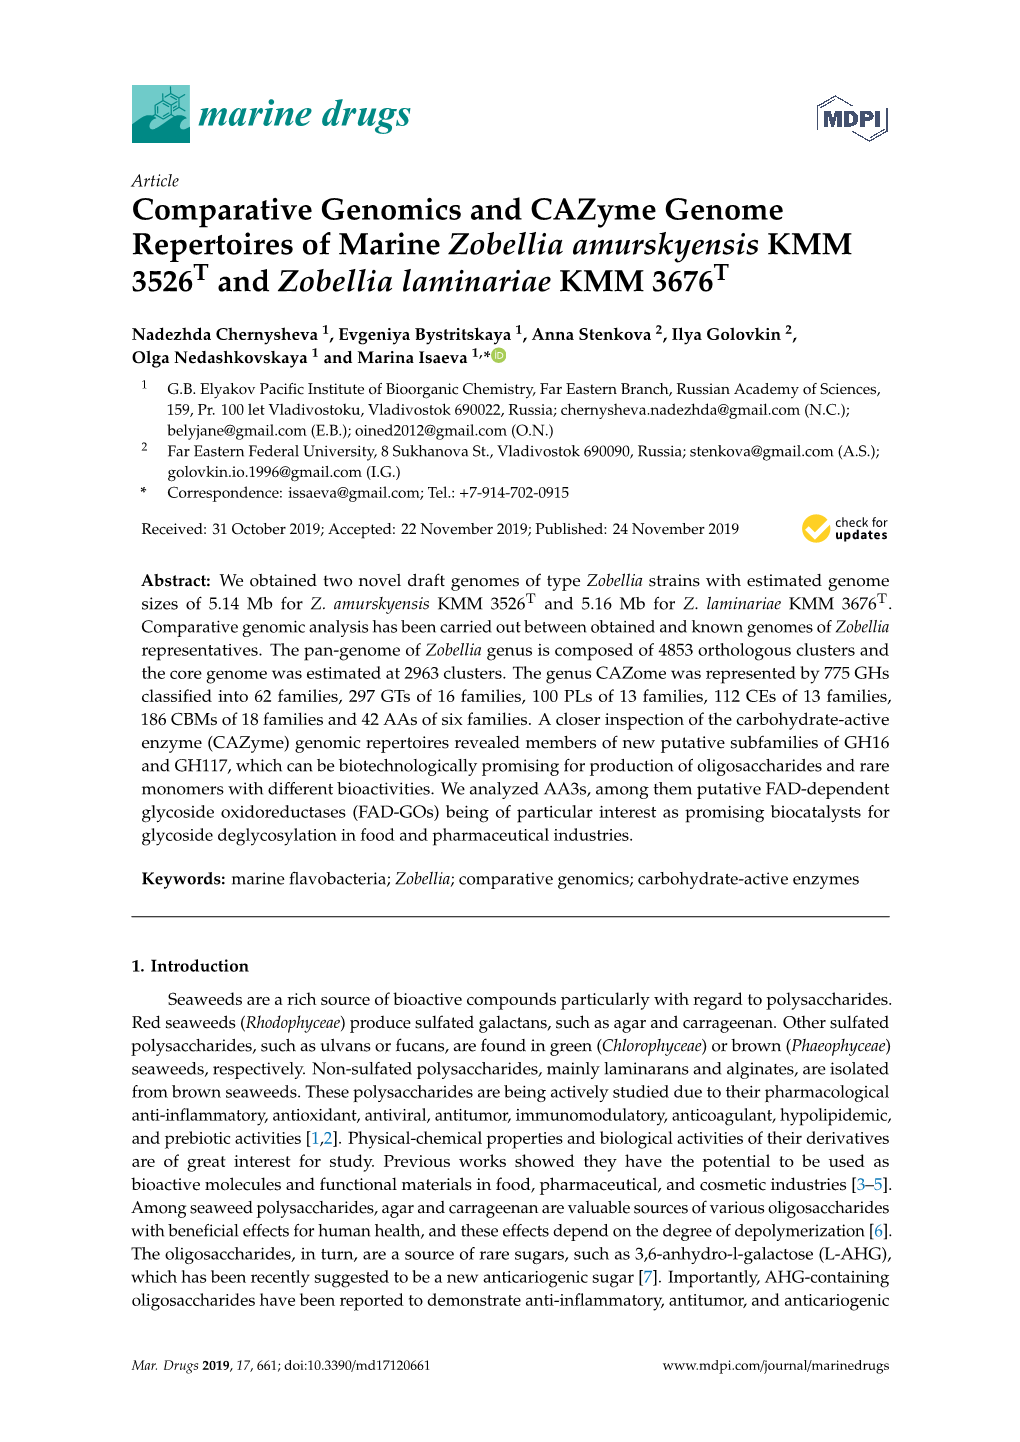 Comparative Genomics and Cazyme Genome Repertoires of Marine Zobellia Amurskyensis KMM 3526T and Zobellia Laminariae KMM 3676T